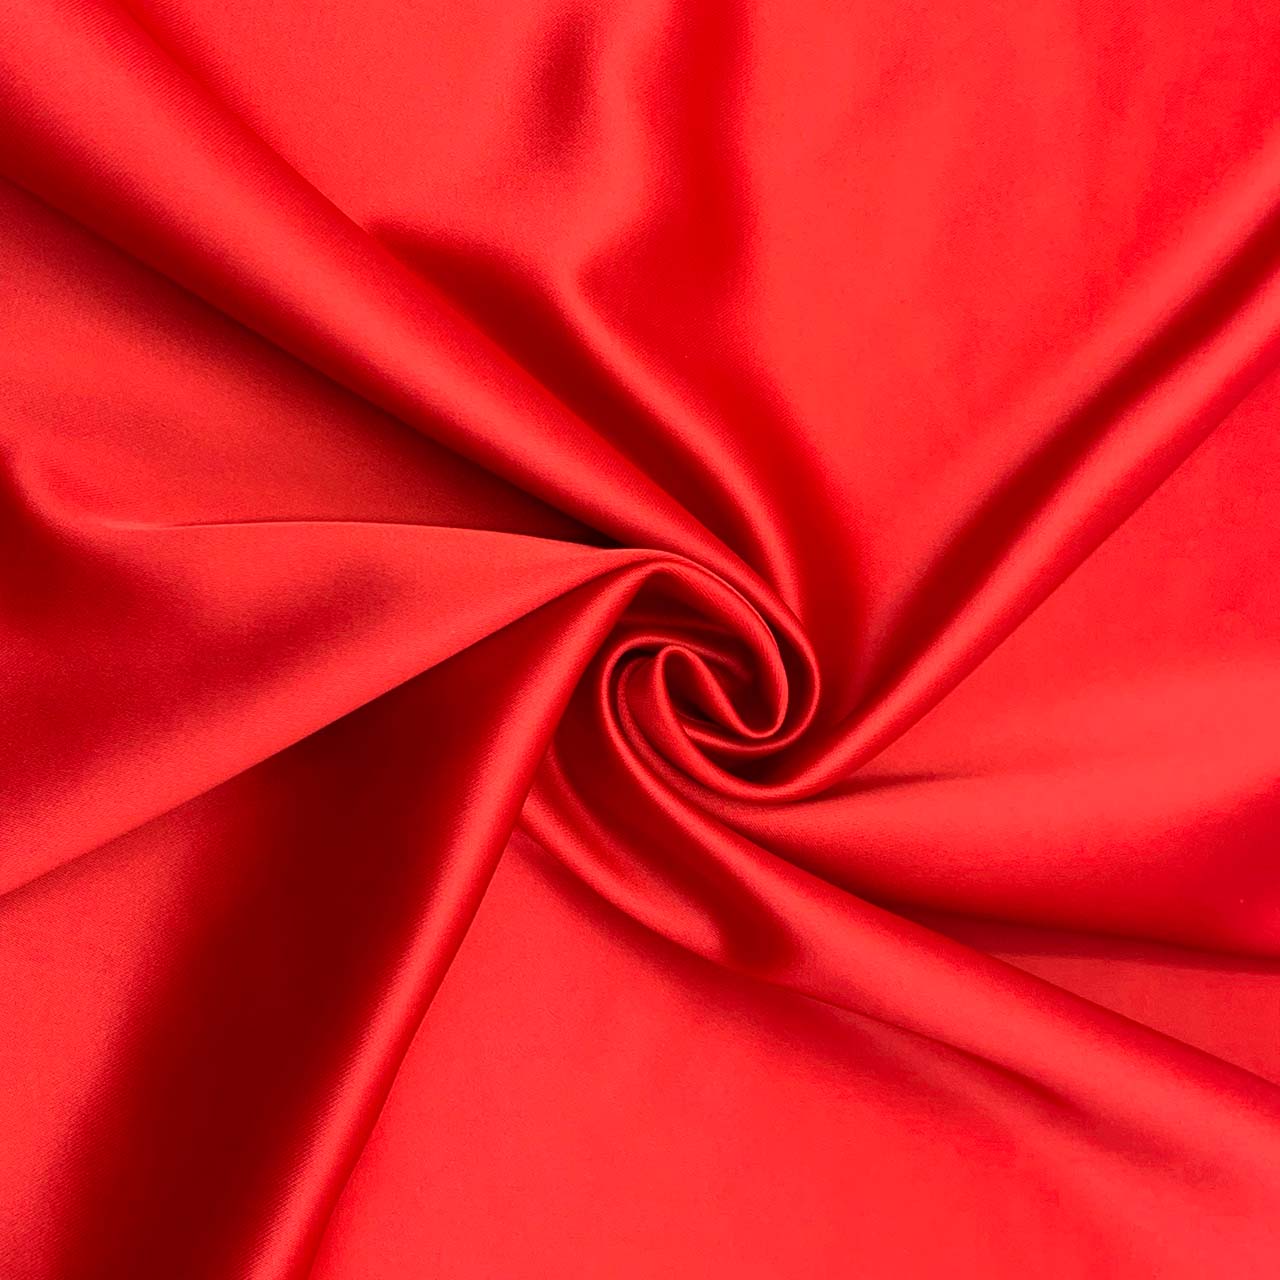 satin fabric red scarlet vaniti satin fabric collection